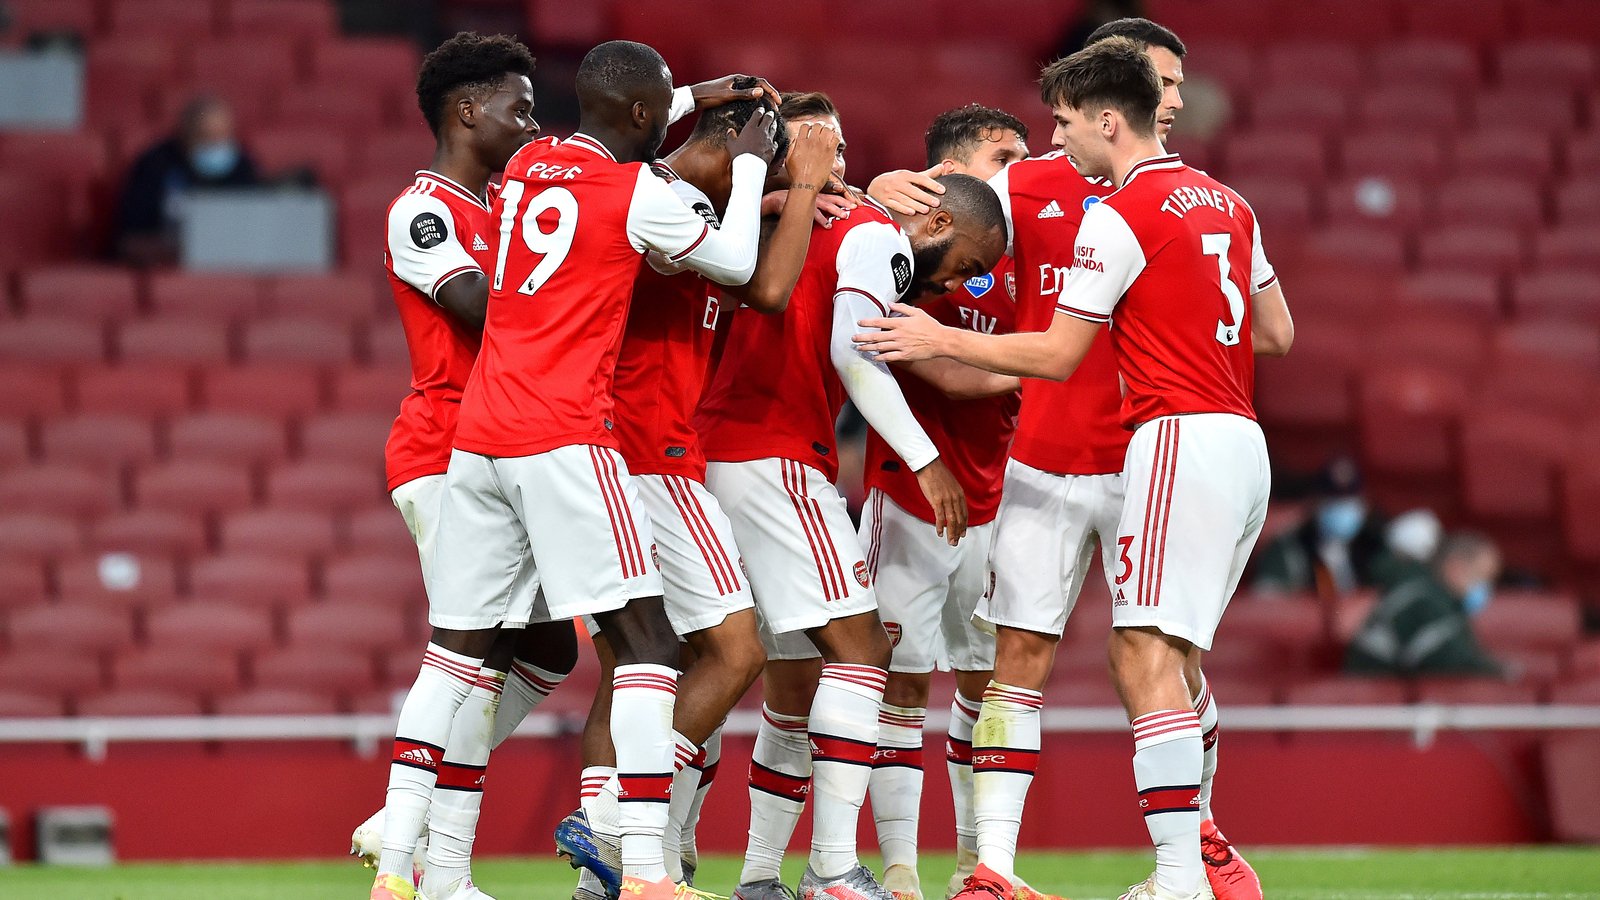 Arsenal 2 - 1 Liverpool - Match Report | Arsenal.com